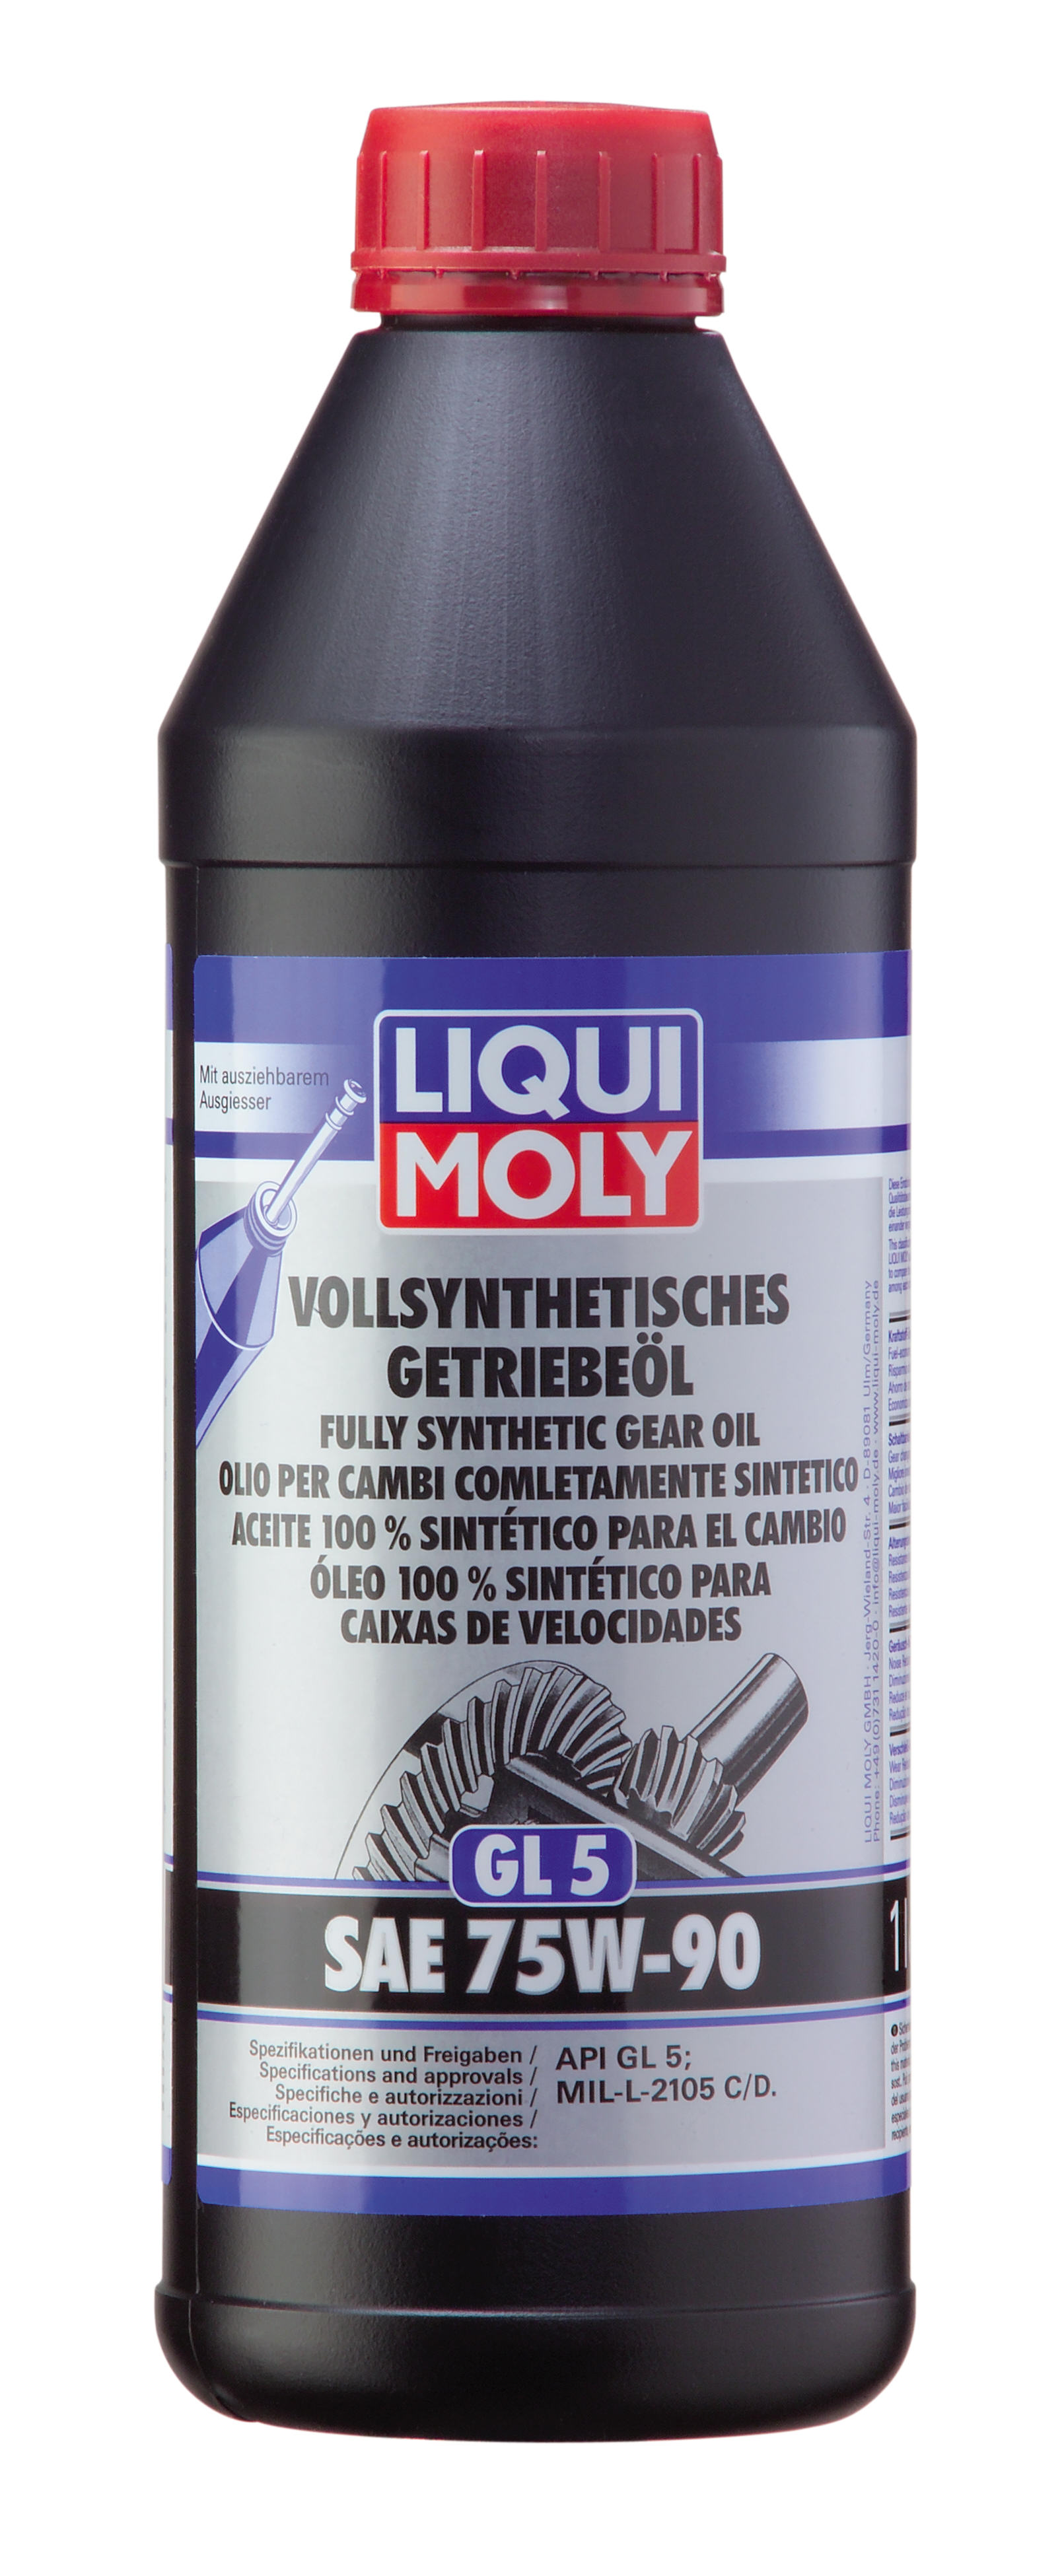 LIQUI MOLY Vollsynthetisches Getriebeoil 75W-90 / Синтетическое трансмиссионное масло 1л (1950)